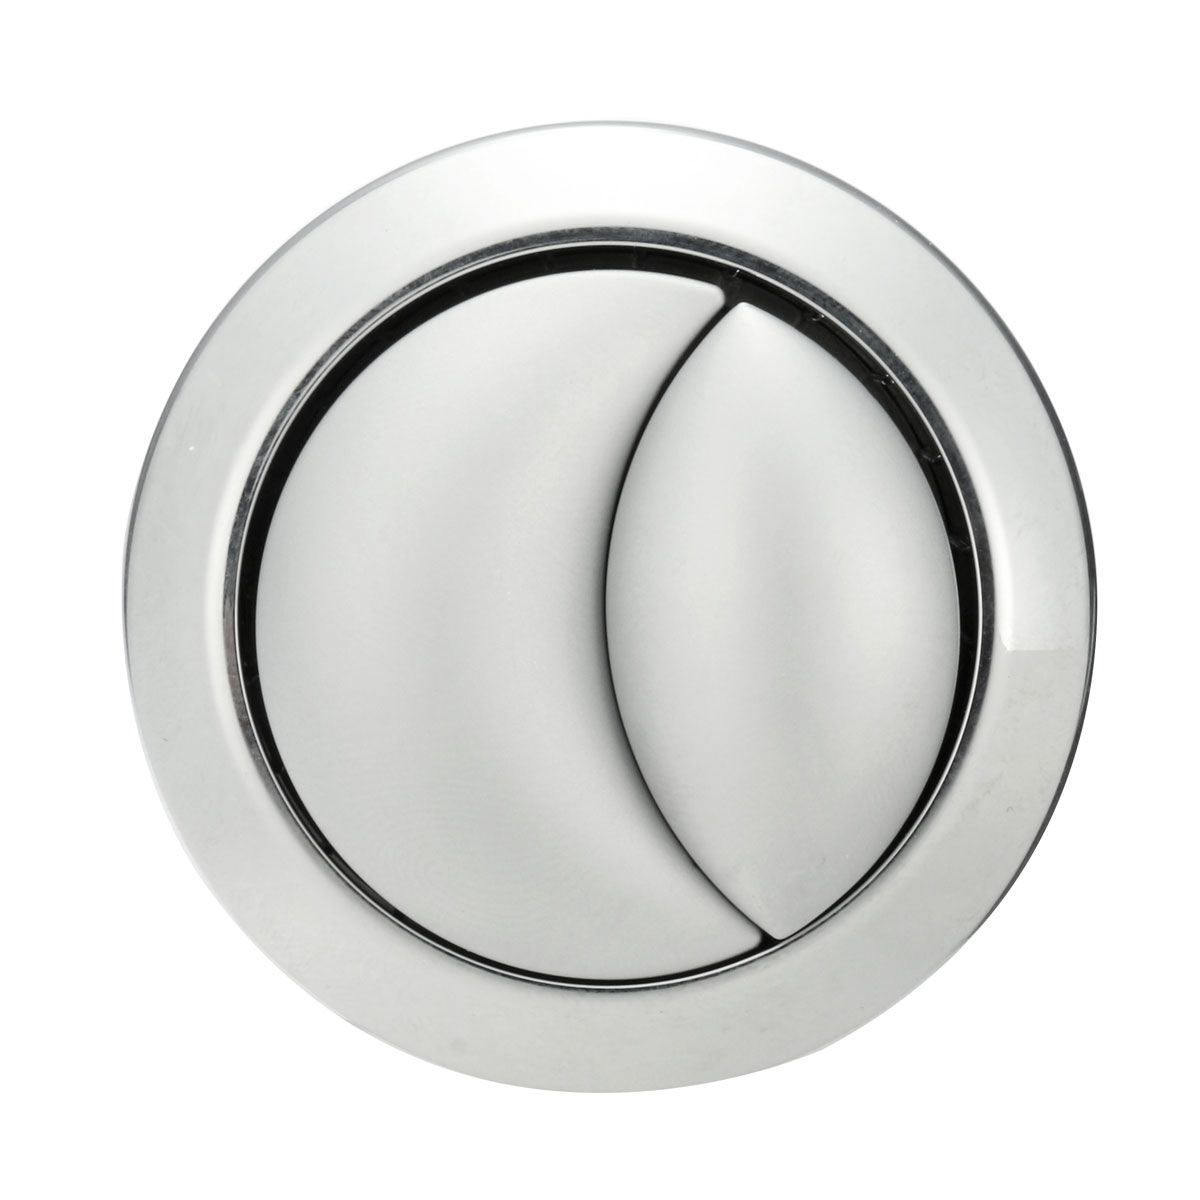 180mm-ABS-Plastic-Silver-Toilet-Dual-Flush-Button-Toilet-Accessories-1096293